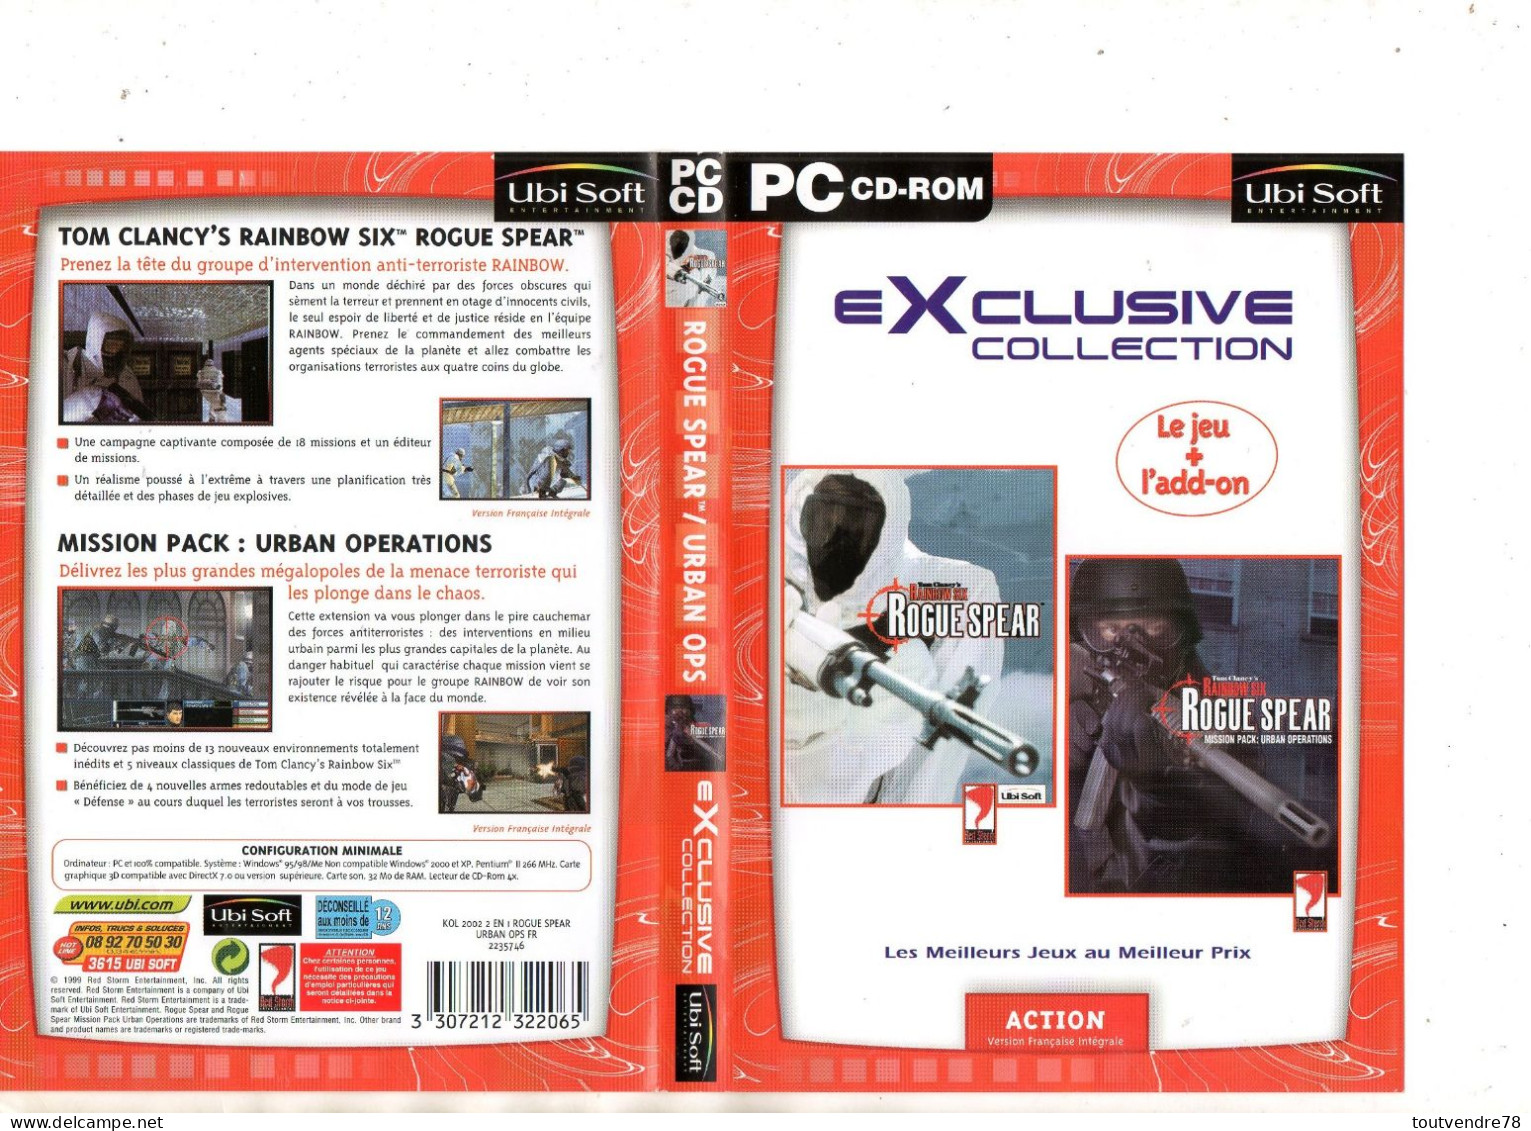 PC07 : Jeu PC "Rainbow Six - Roque Spear" + "Mission Pack" - Giochi PC